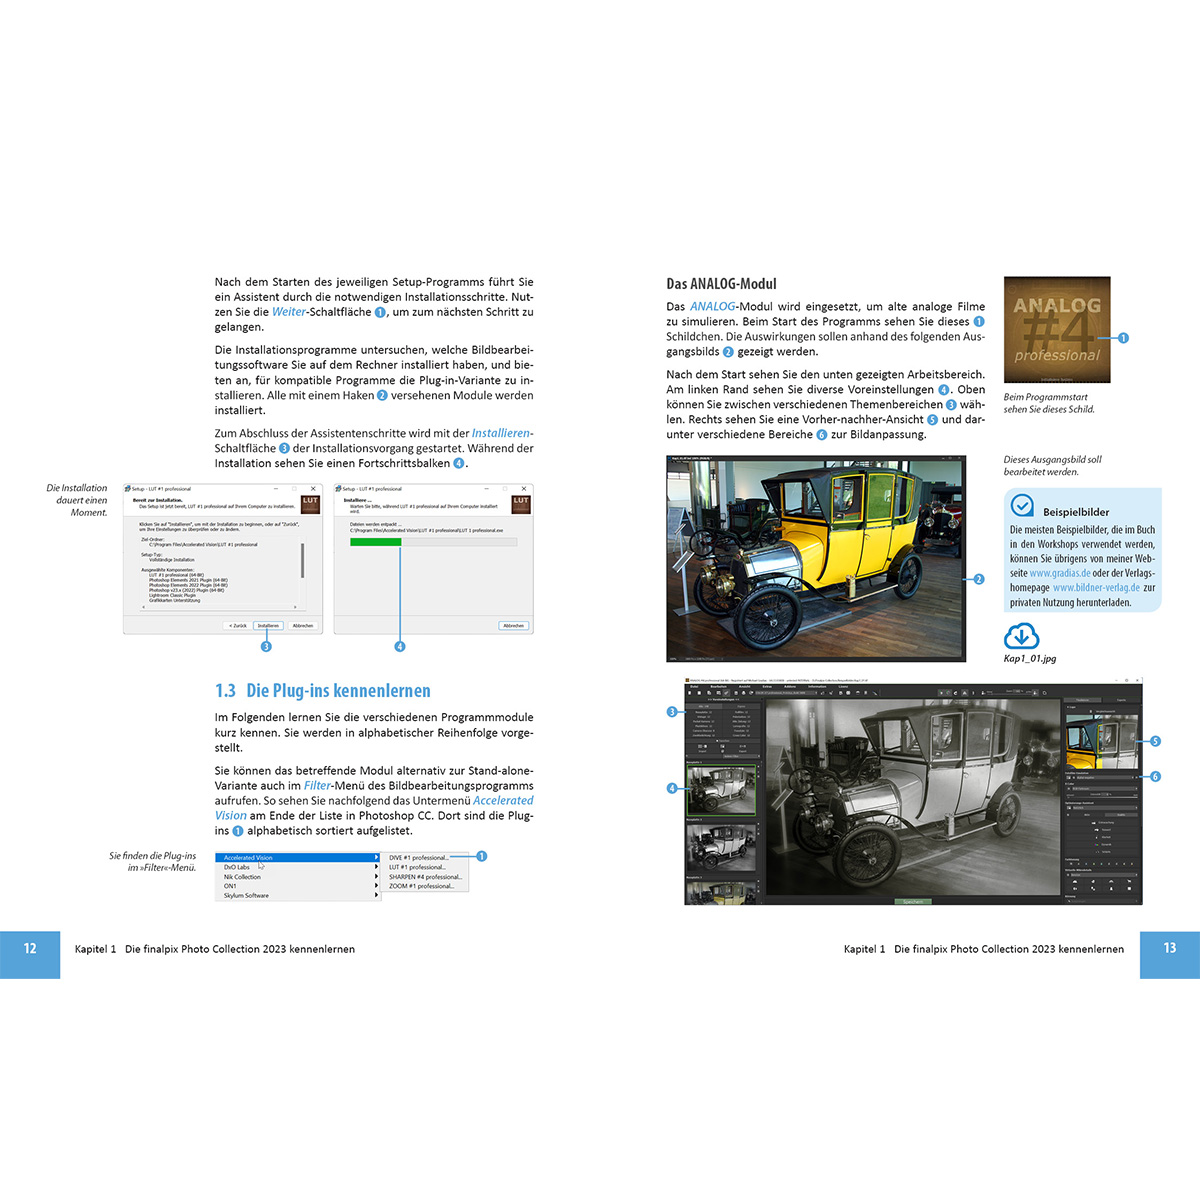 Collection 7 Bildbearbeitungstools - Das zu smarten finalpix den Photo umfassende 2023 Praxisbuch